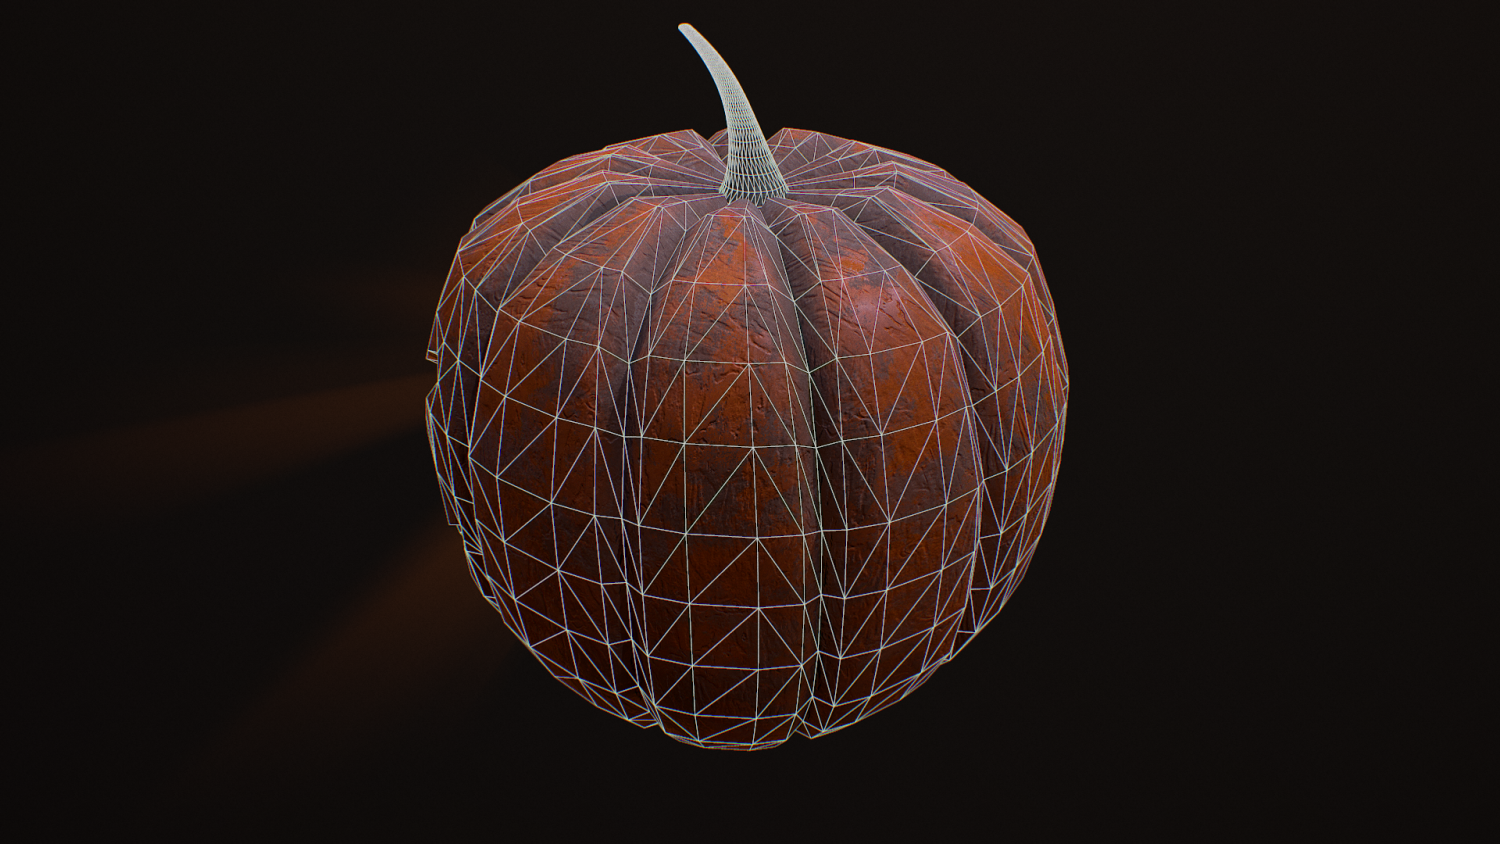 Creepy Pumpkin in Characters - UE Marketplace